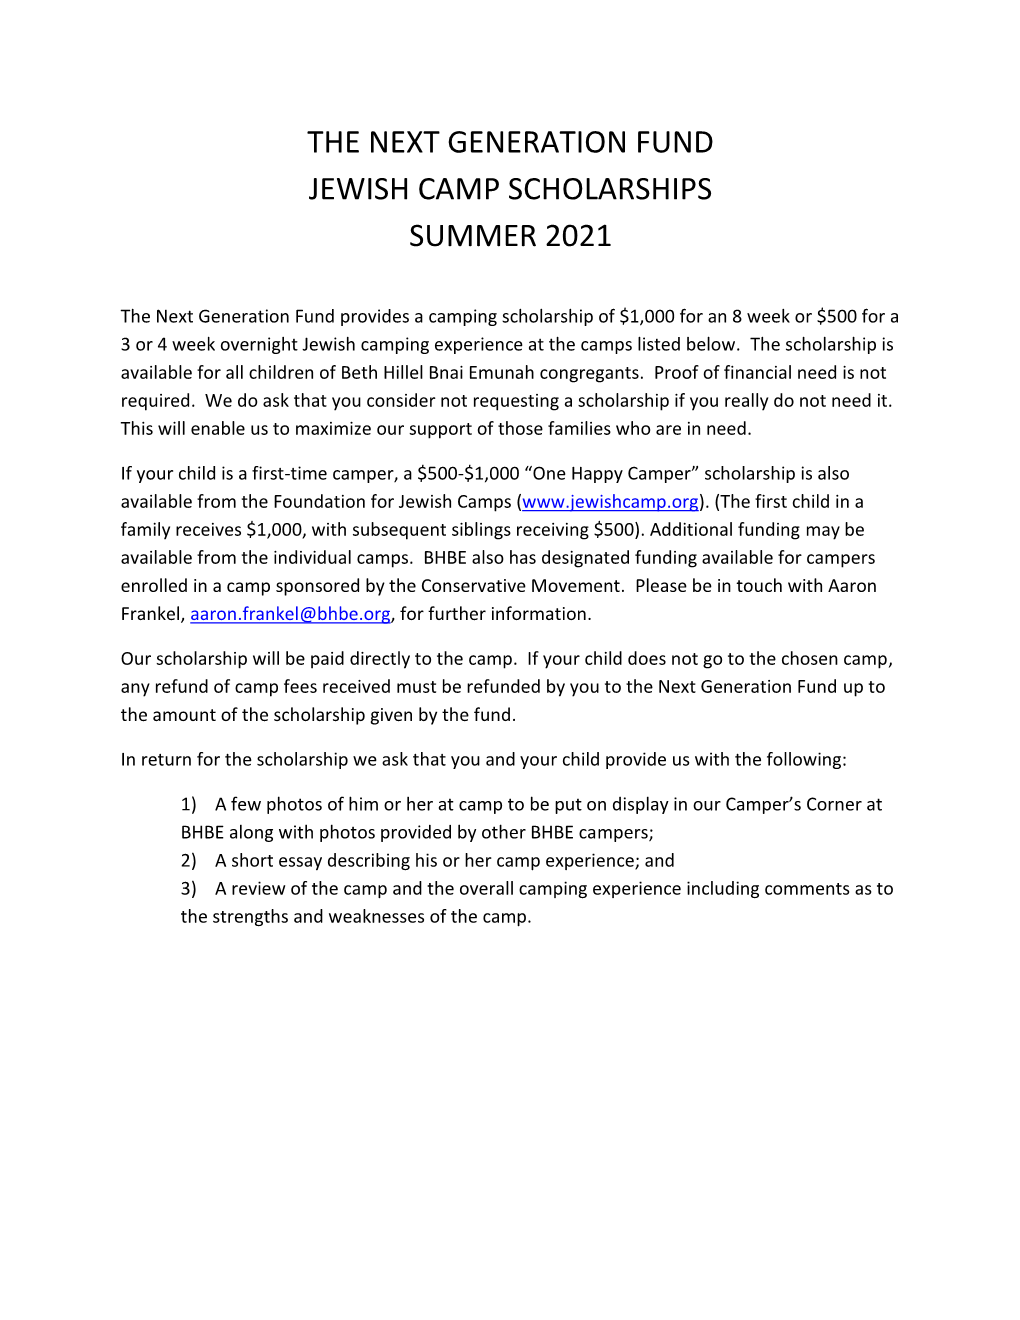 The Next Generation Fund Jewish Camp Scholarships Summer 2021